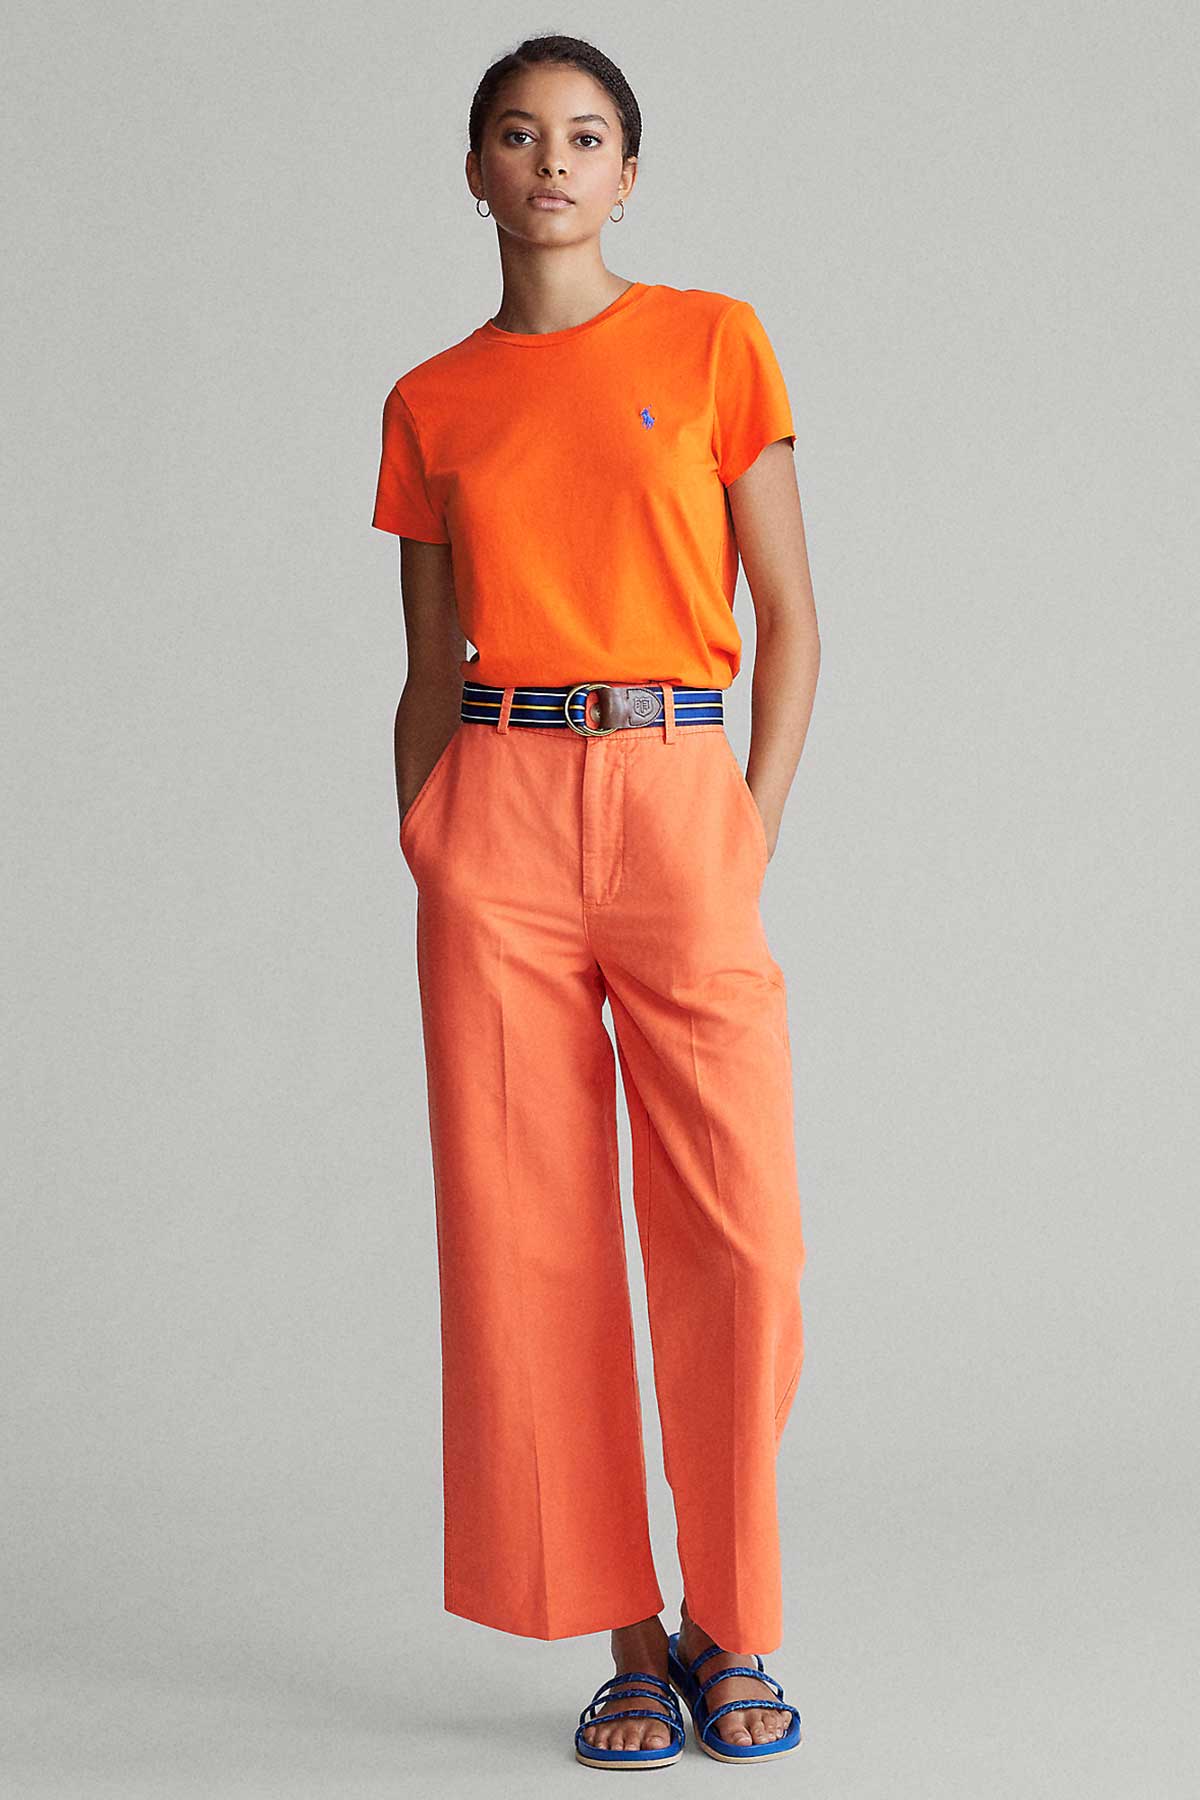 Polo Ralph Lauren T-shirt-Libas Trendy Fashion Store